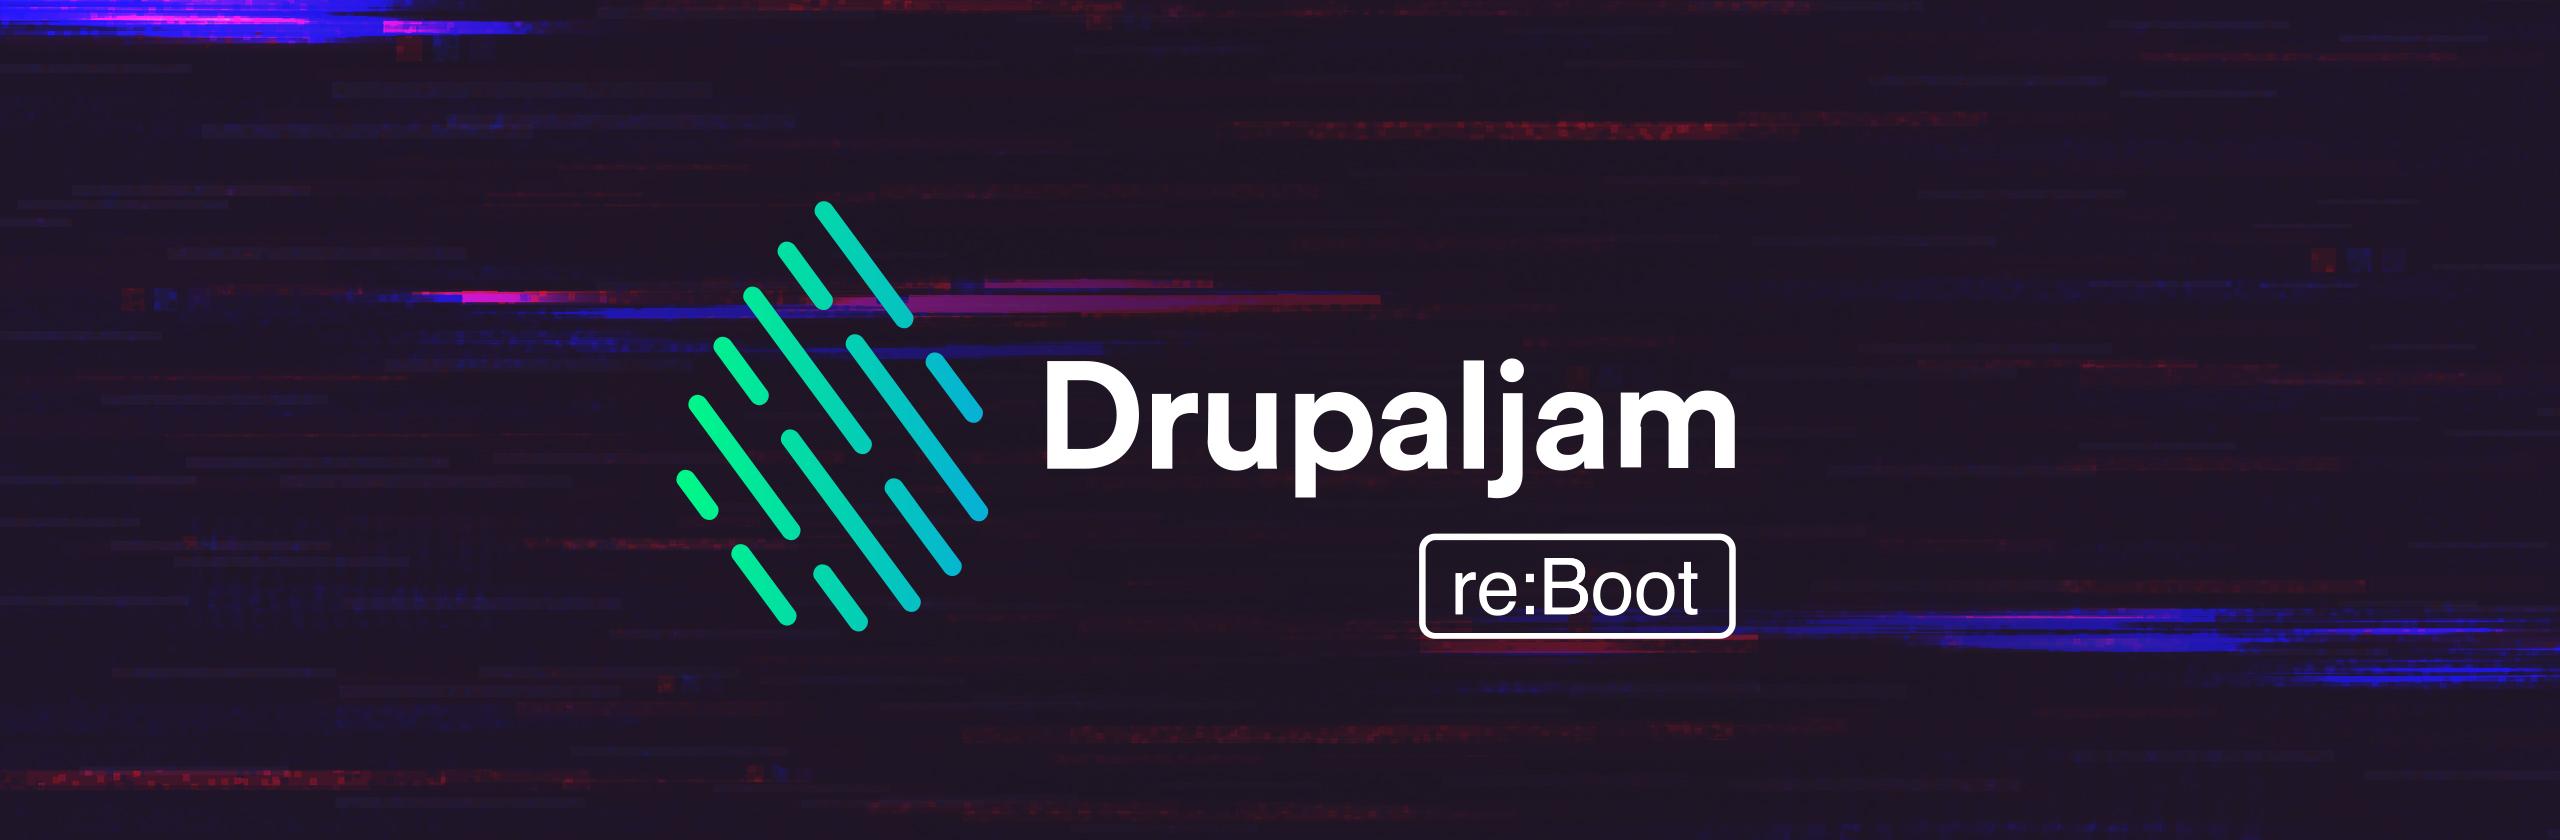 DrupalJam 2020 re:Boot